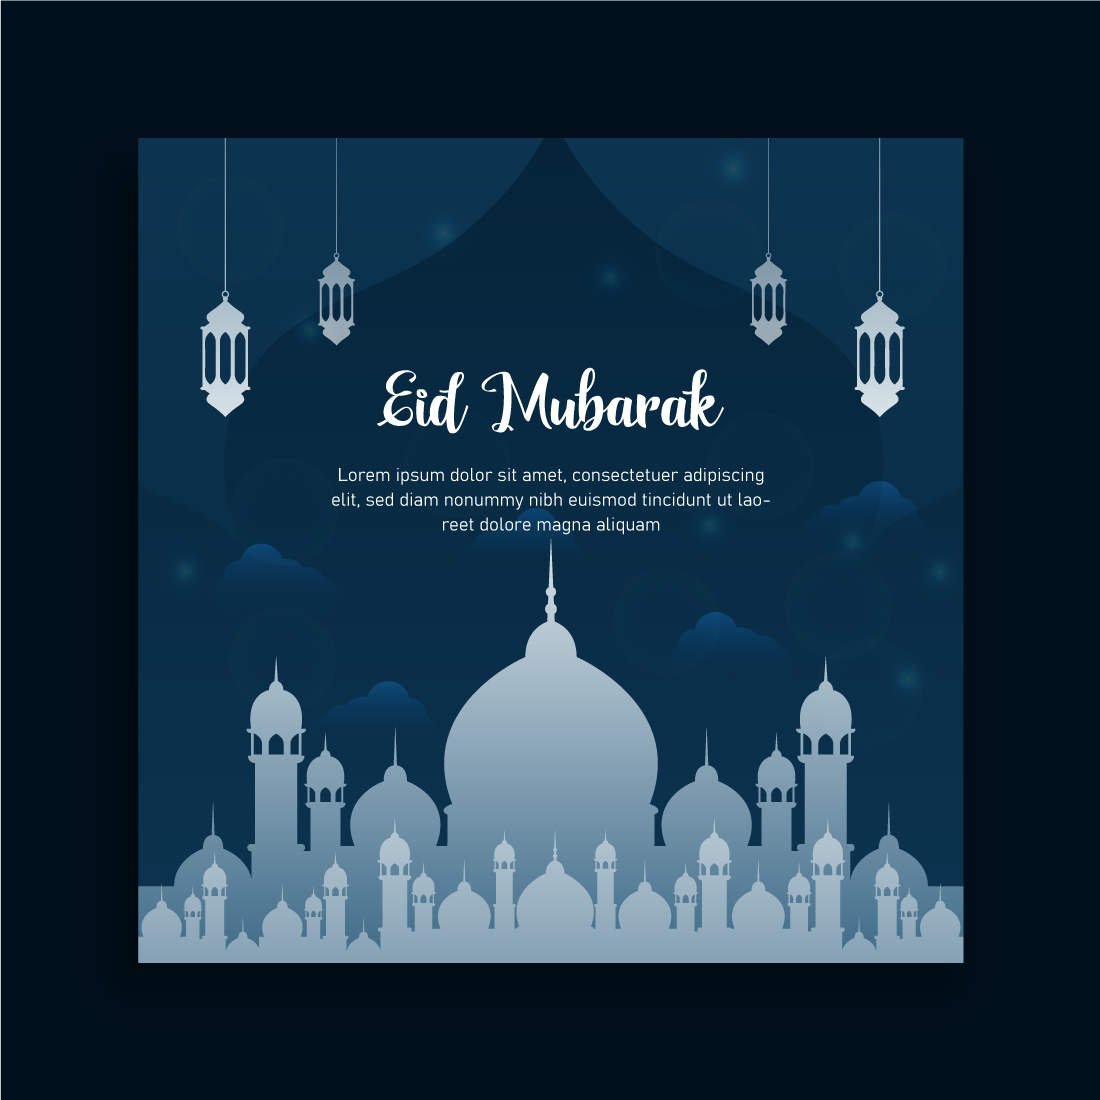 Eid Social Media Web Banner Template cover image.